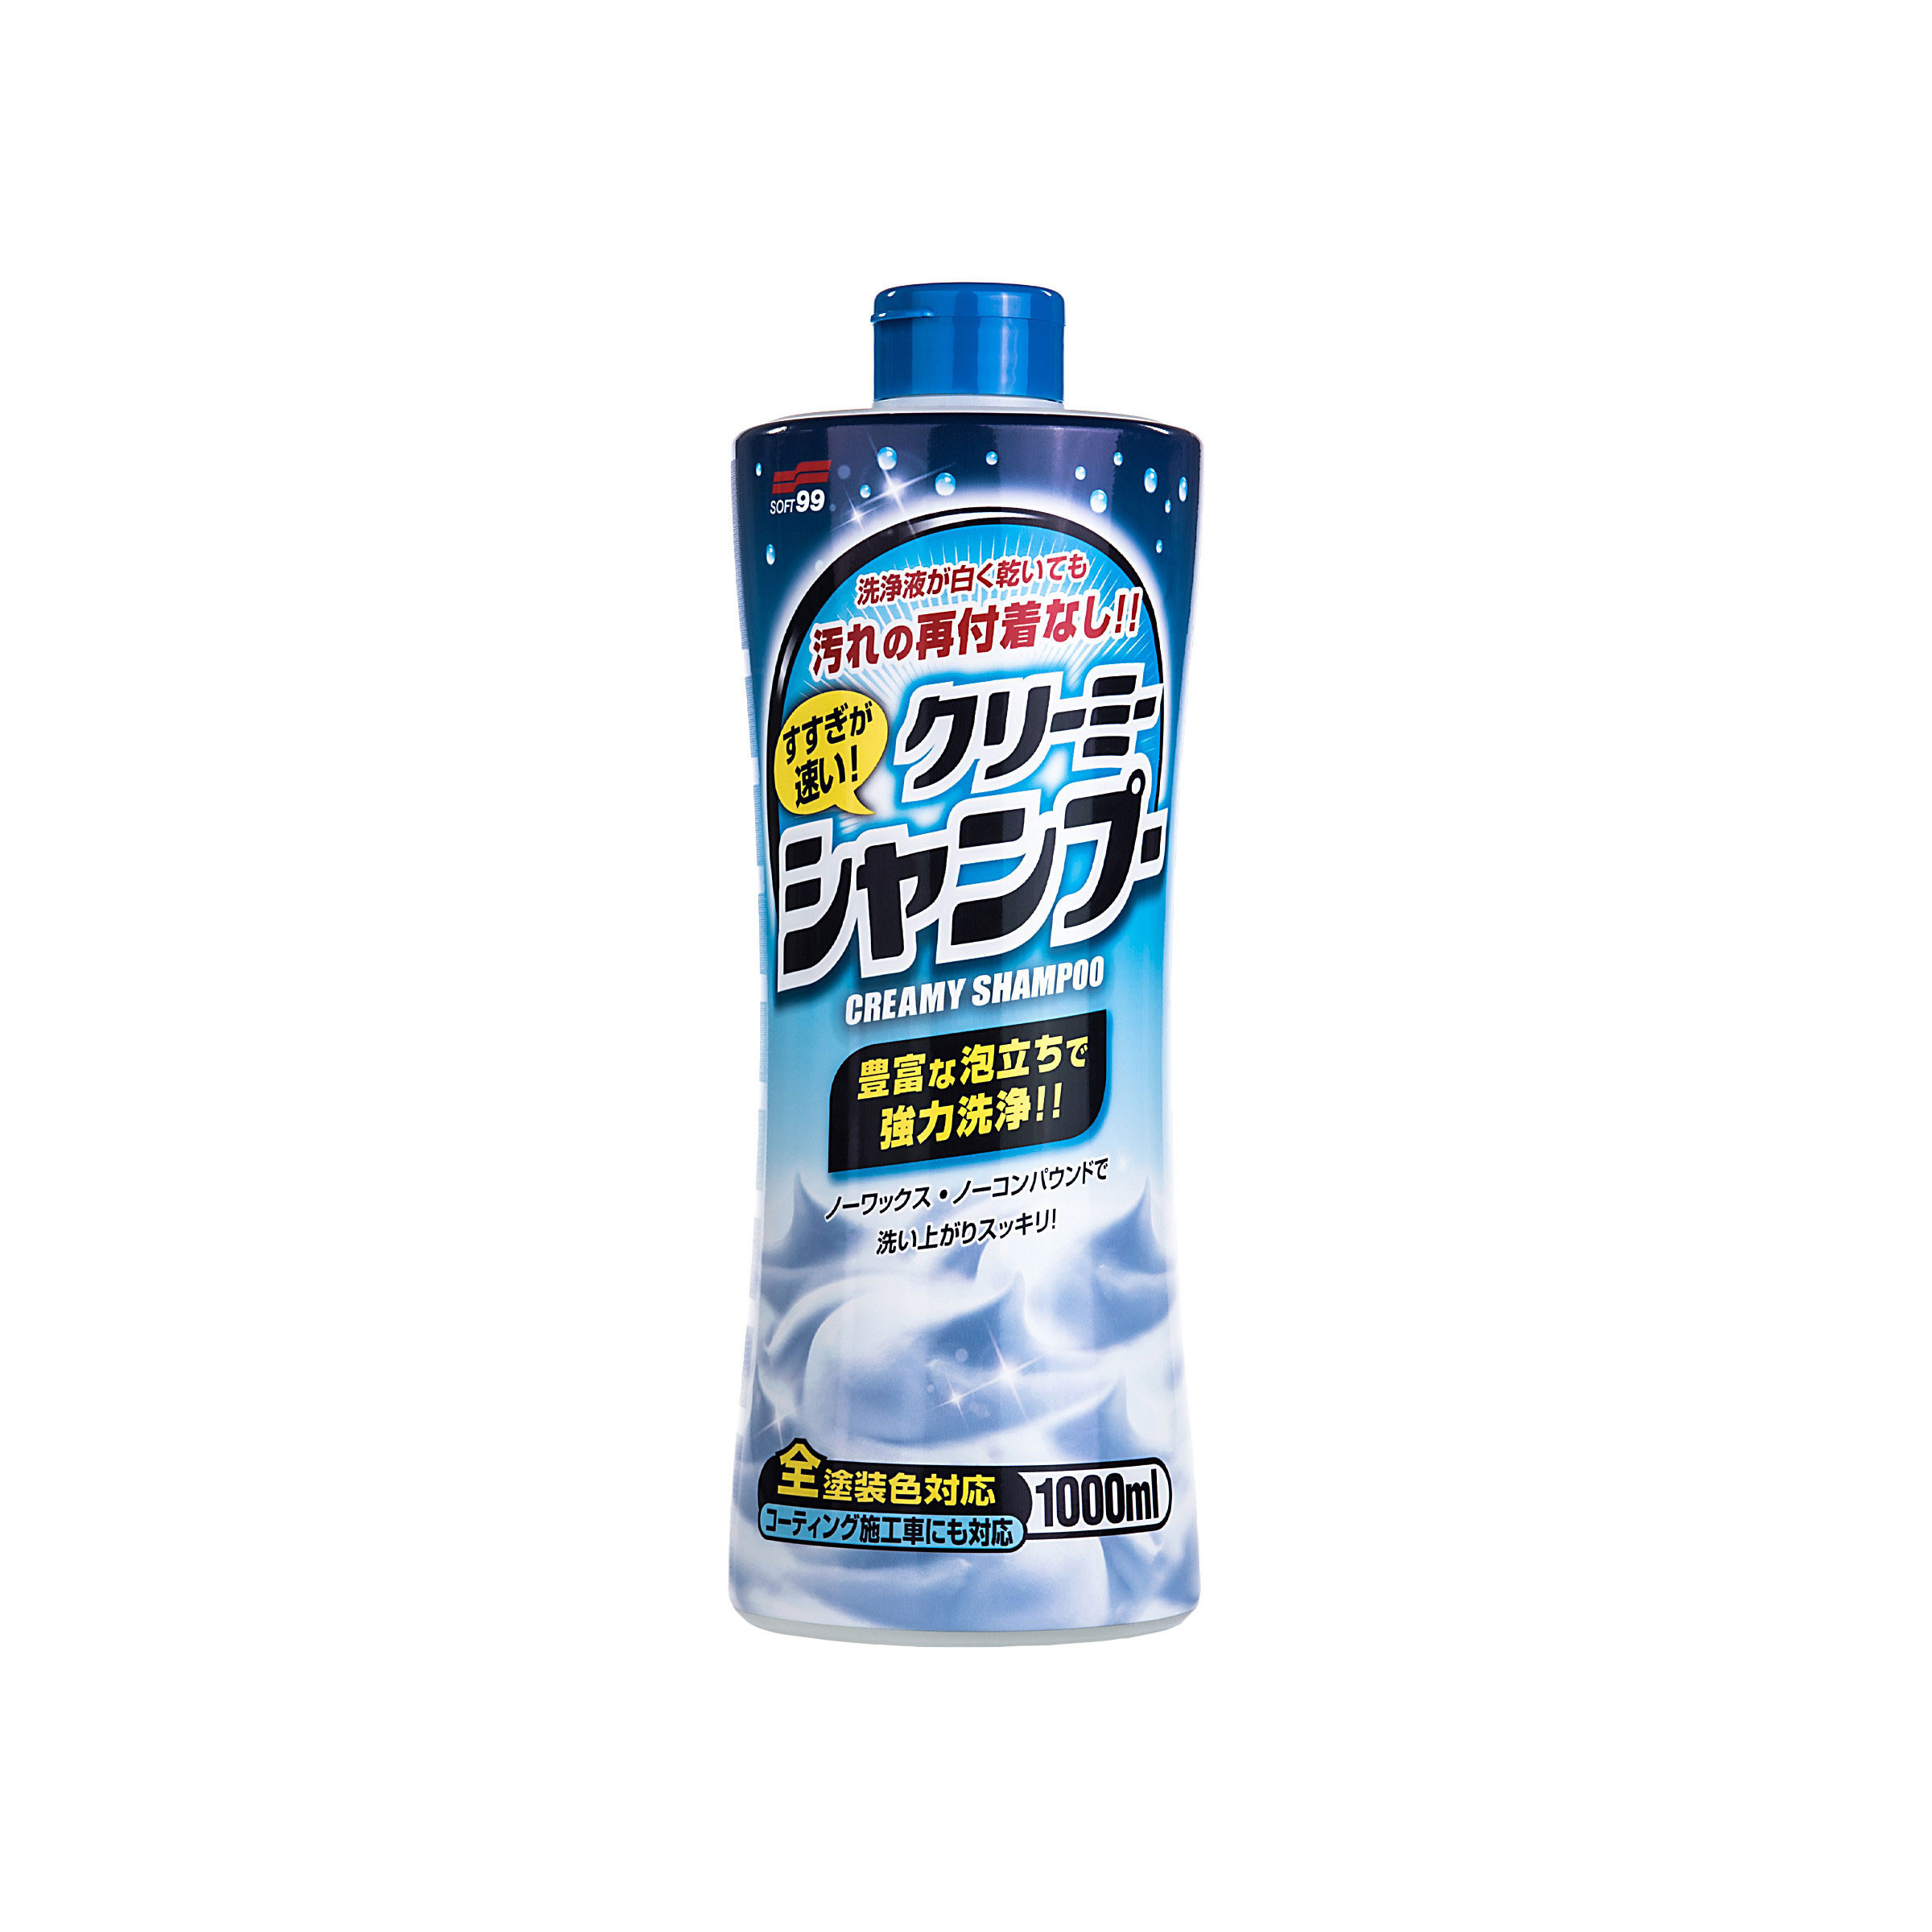 Neutral Creamy Shampoo, Auto-Shampoo, 1000 ml